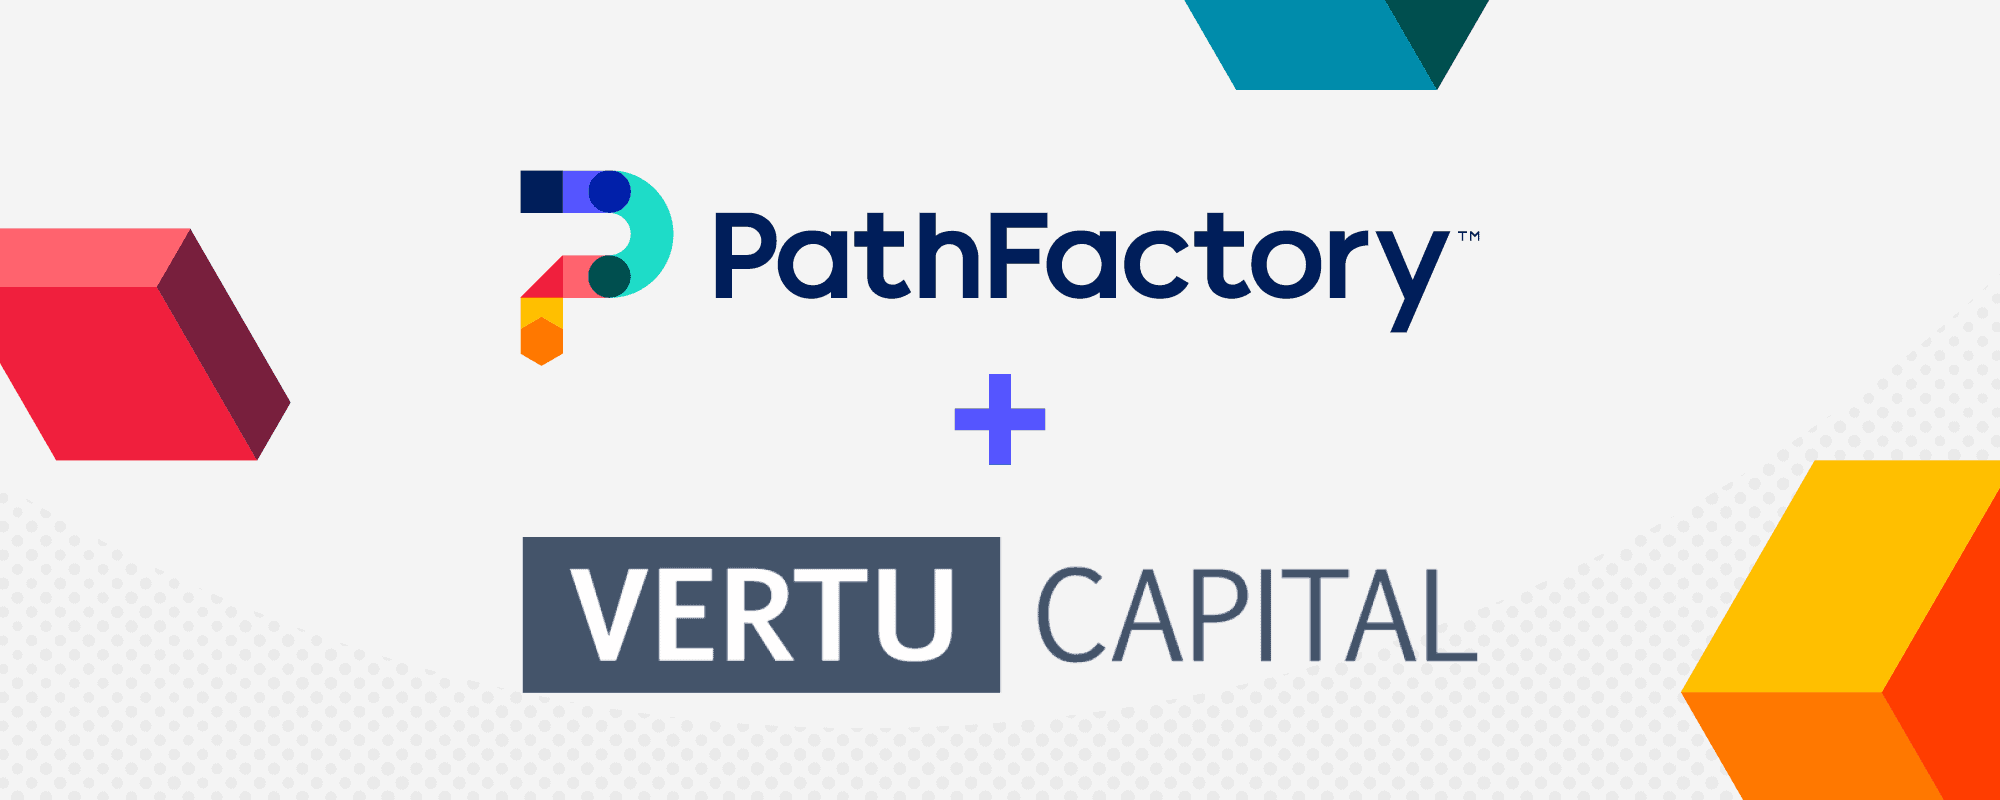 PathFactory + Vertu Capital